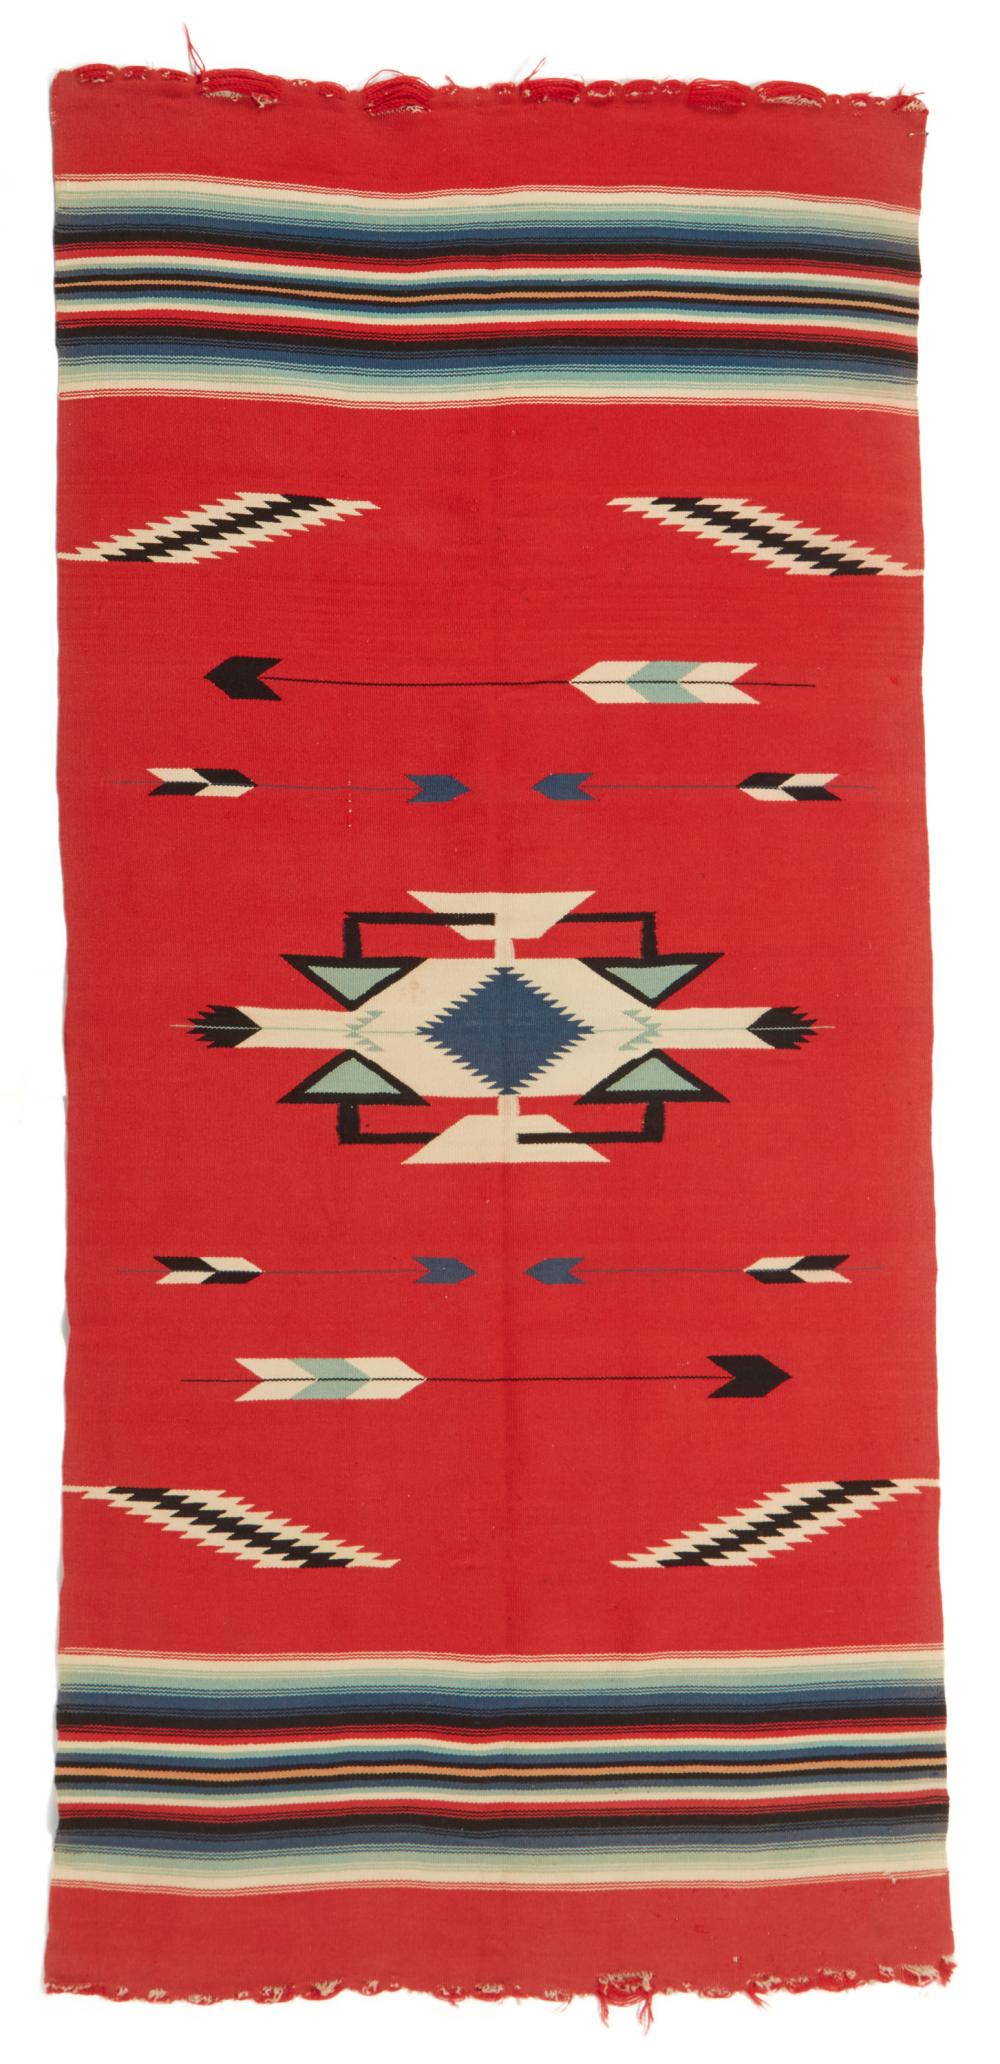 A CHIMAYO TEXTILEA Chimayo textile  3442e4